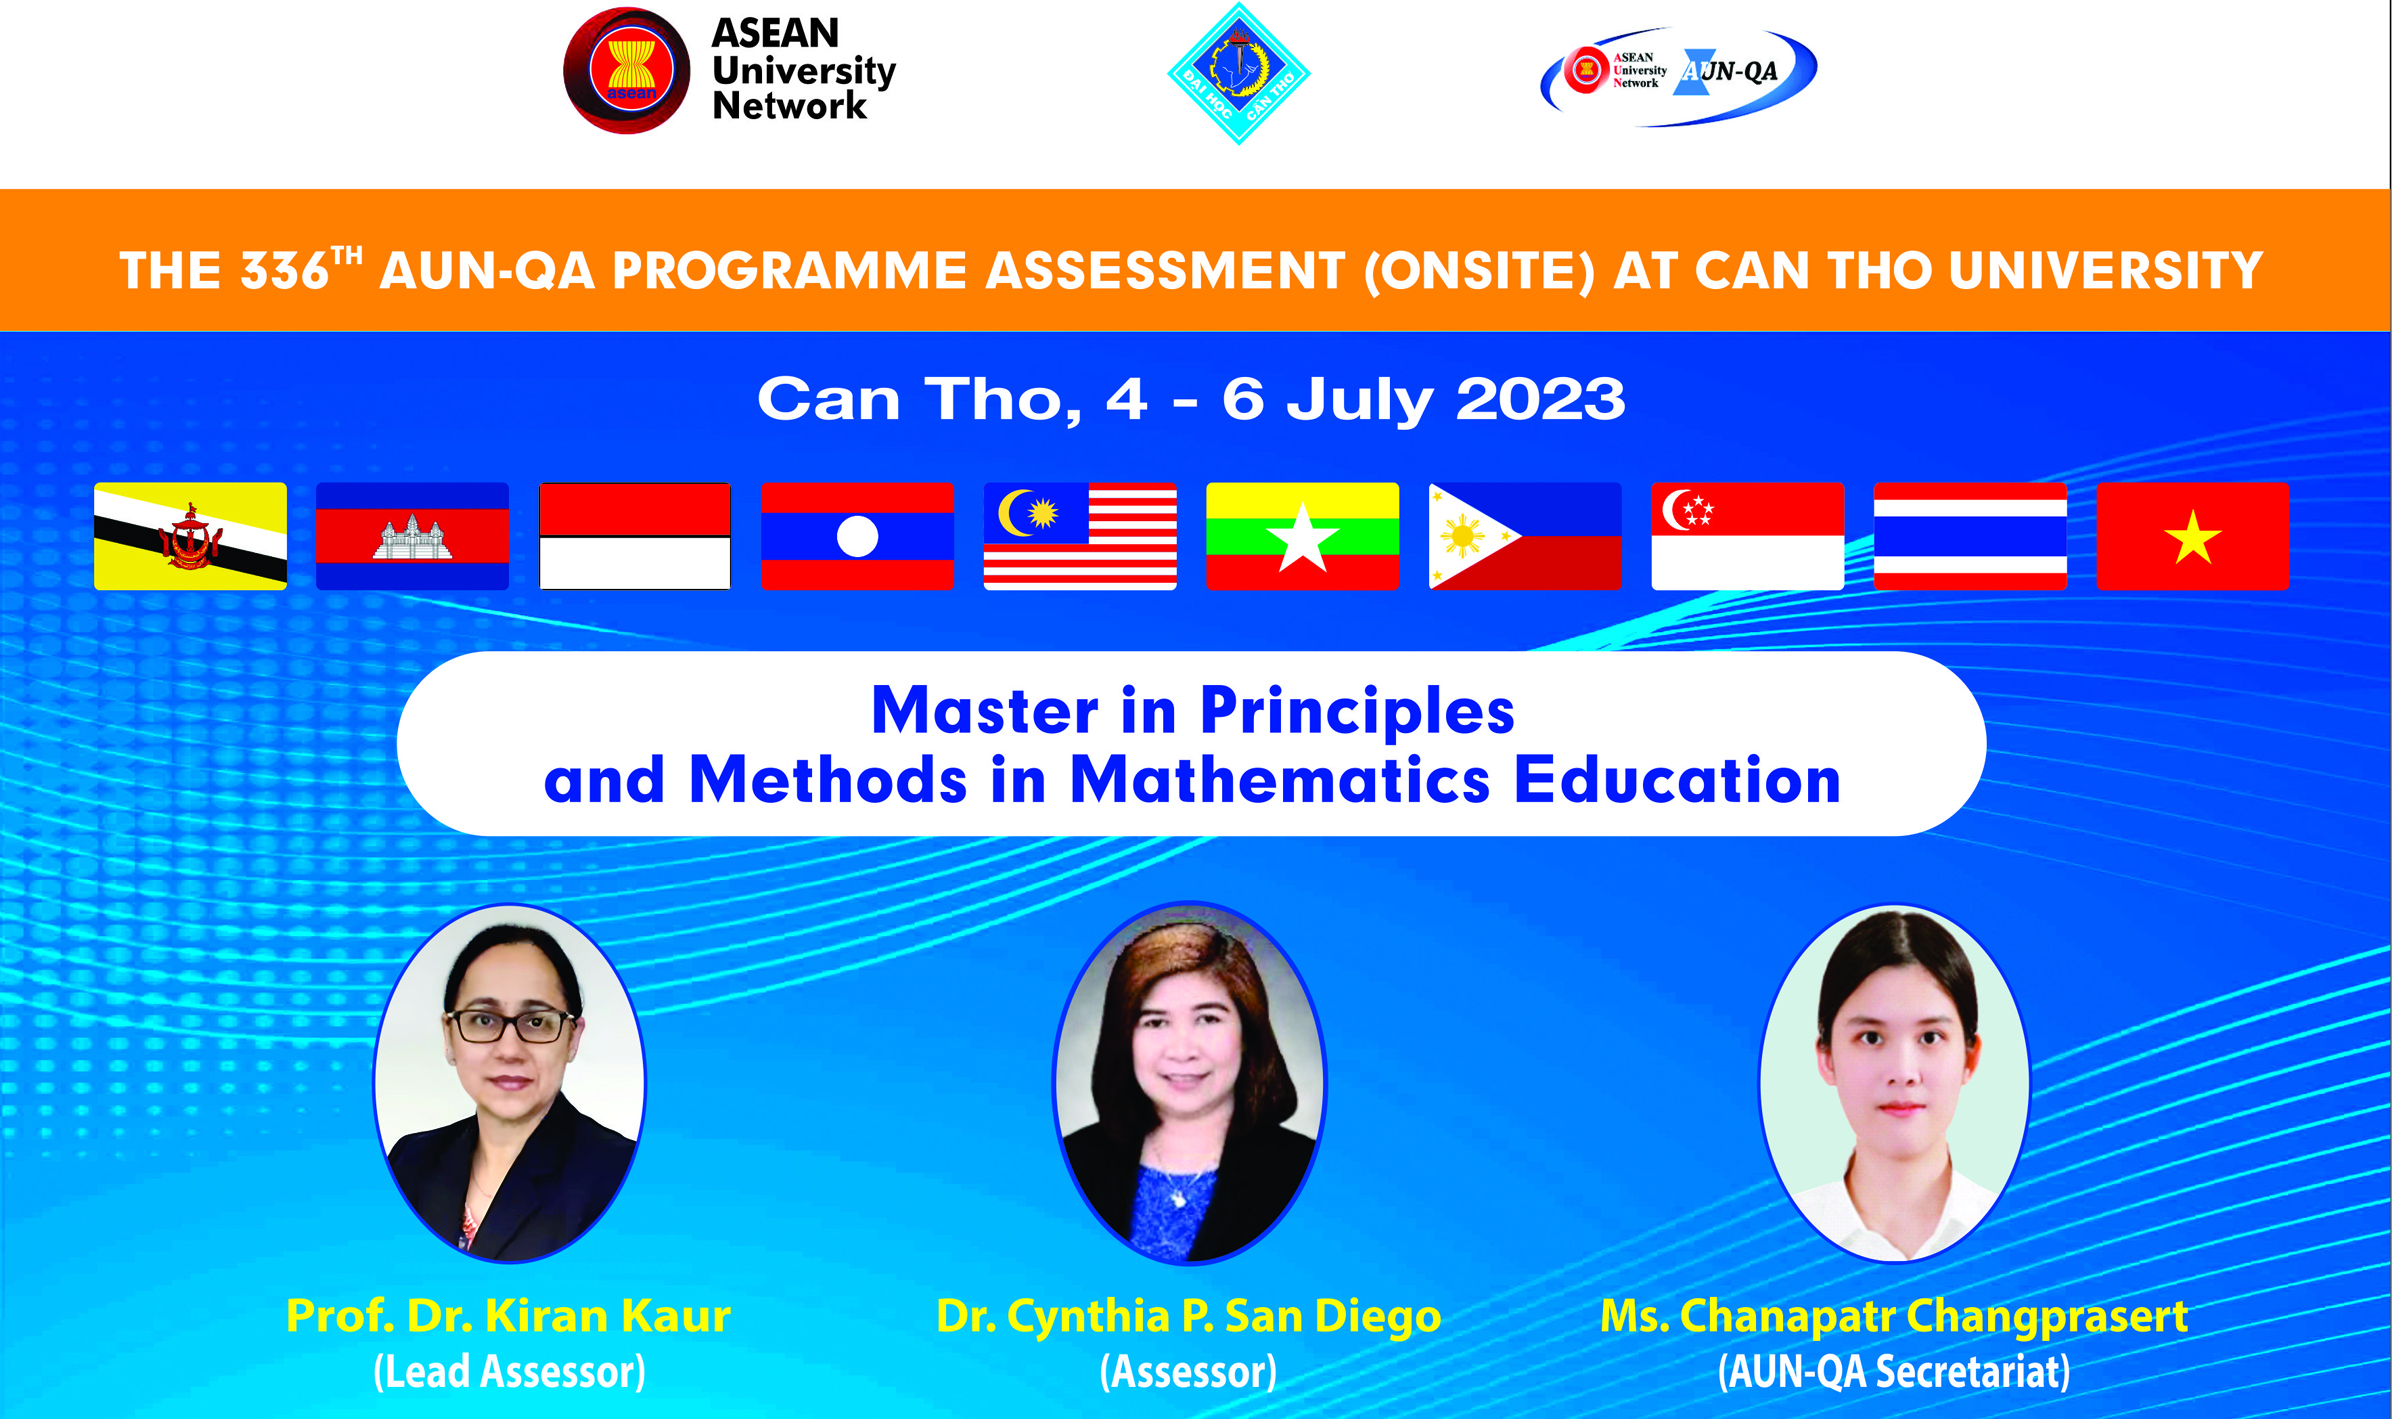 The 336th AUN-QA Program Assessment at School of Education